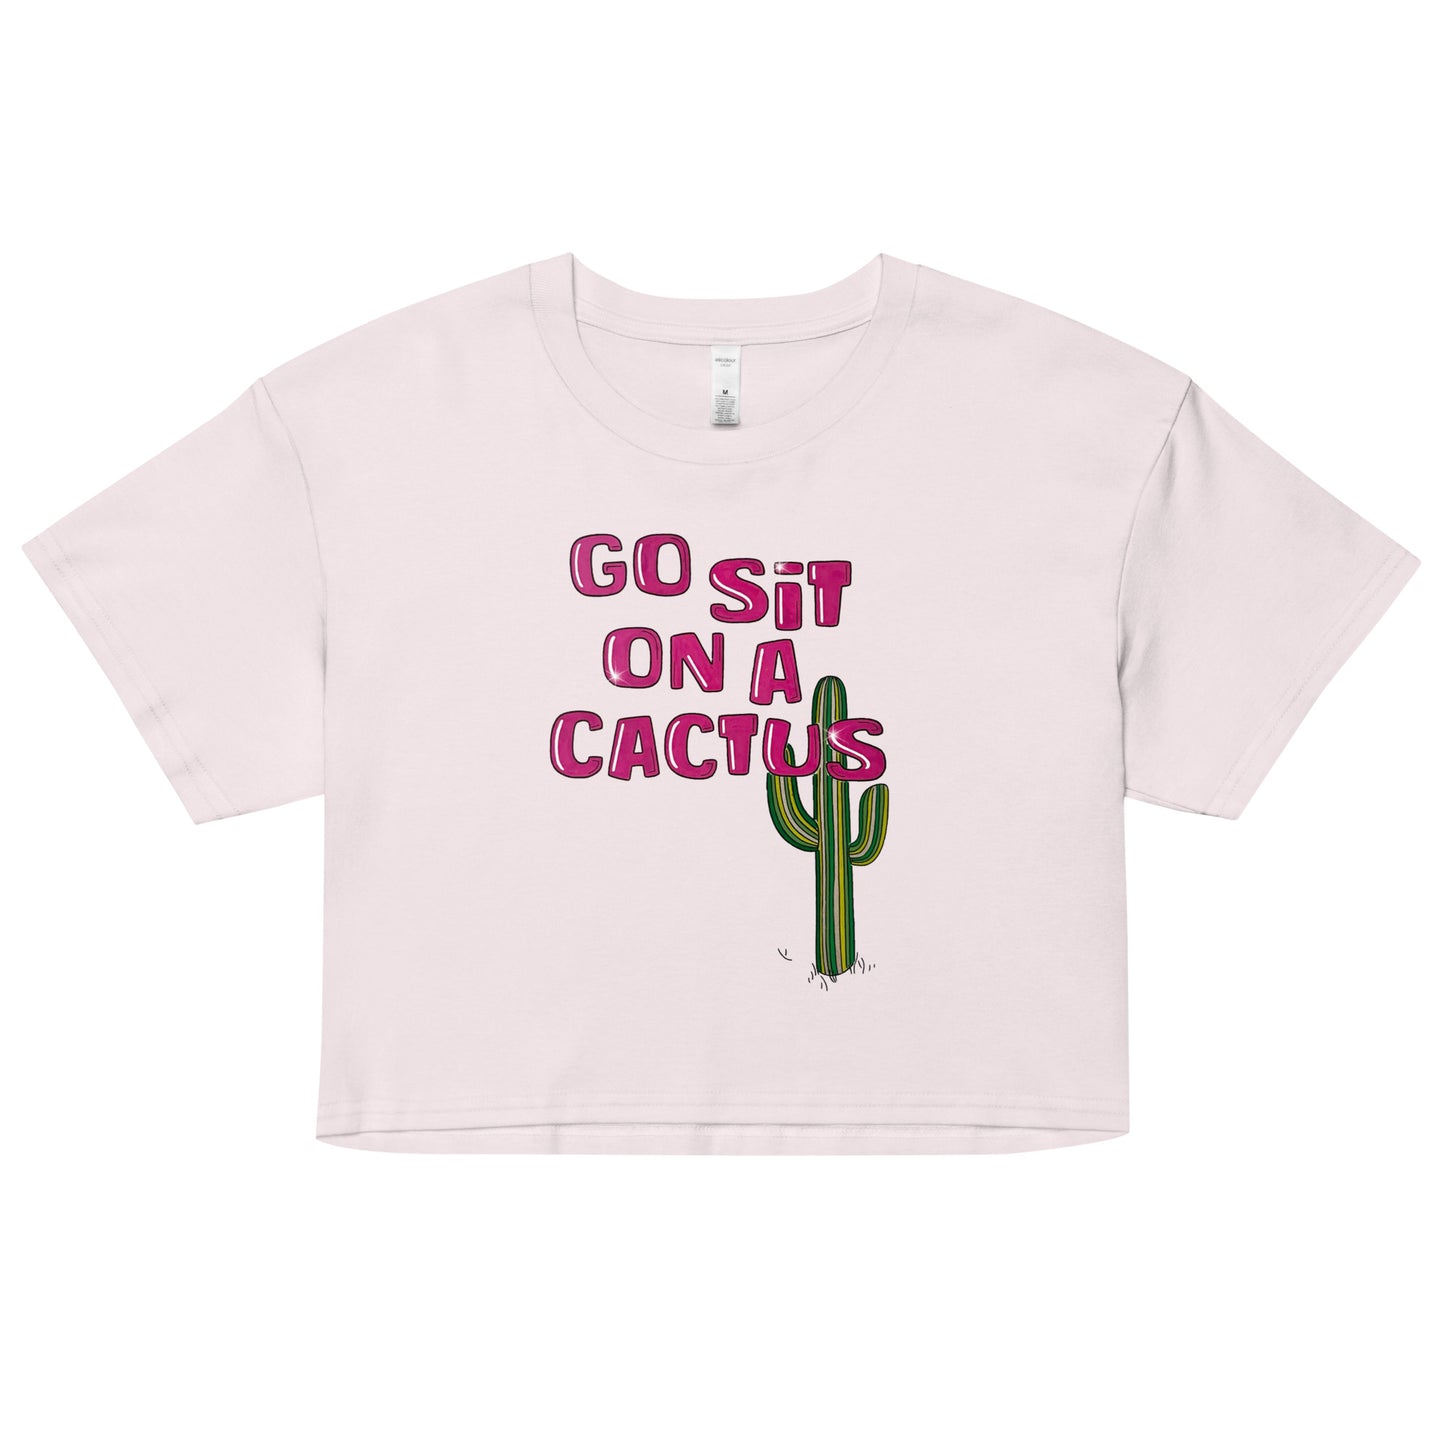 Go Sit On a Cactus crop top